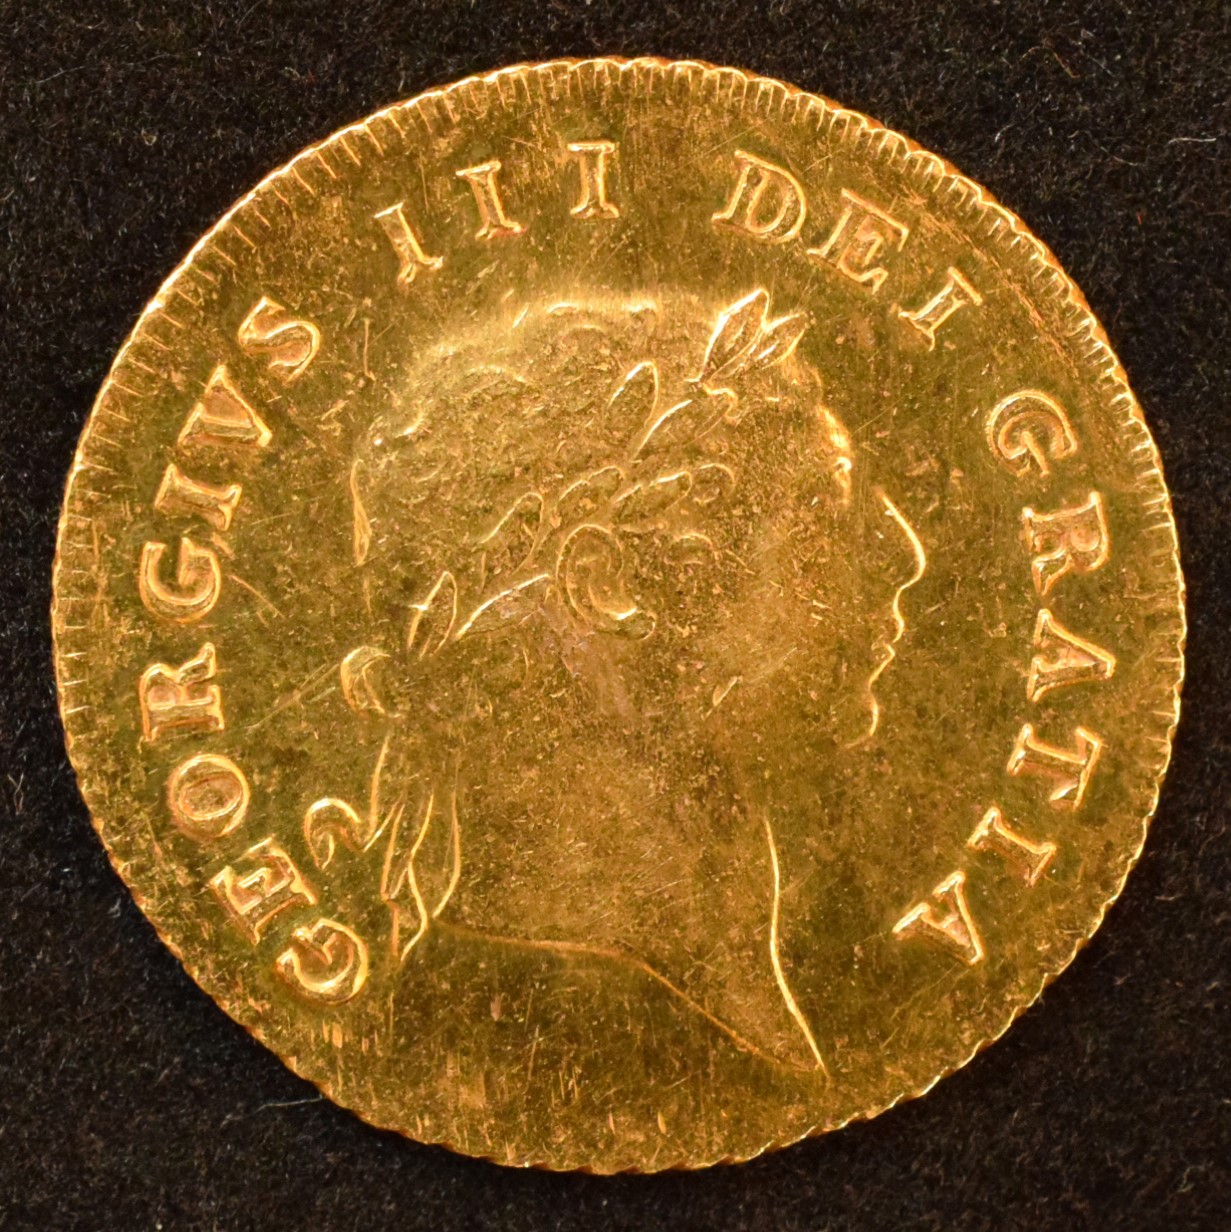 King George III, Half-Guinea, 1810, Seventh laureate head r. with short hair, R. shield in garter,